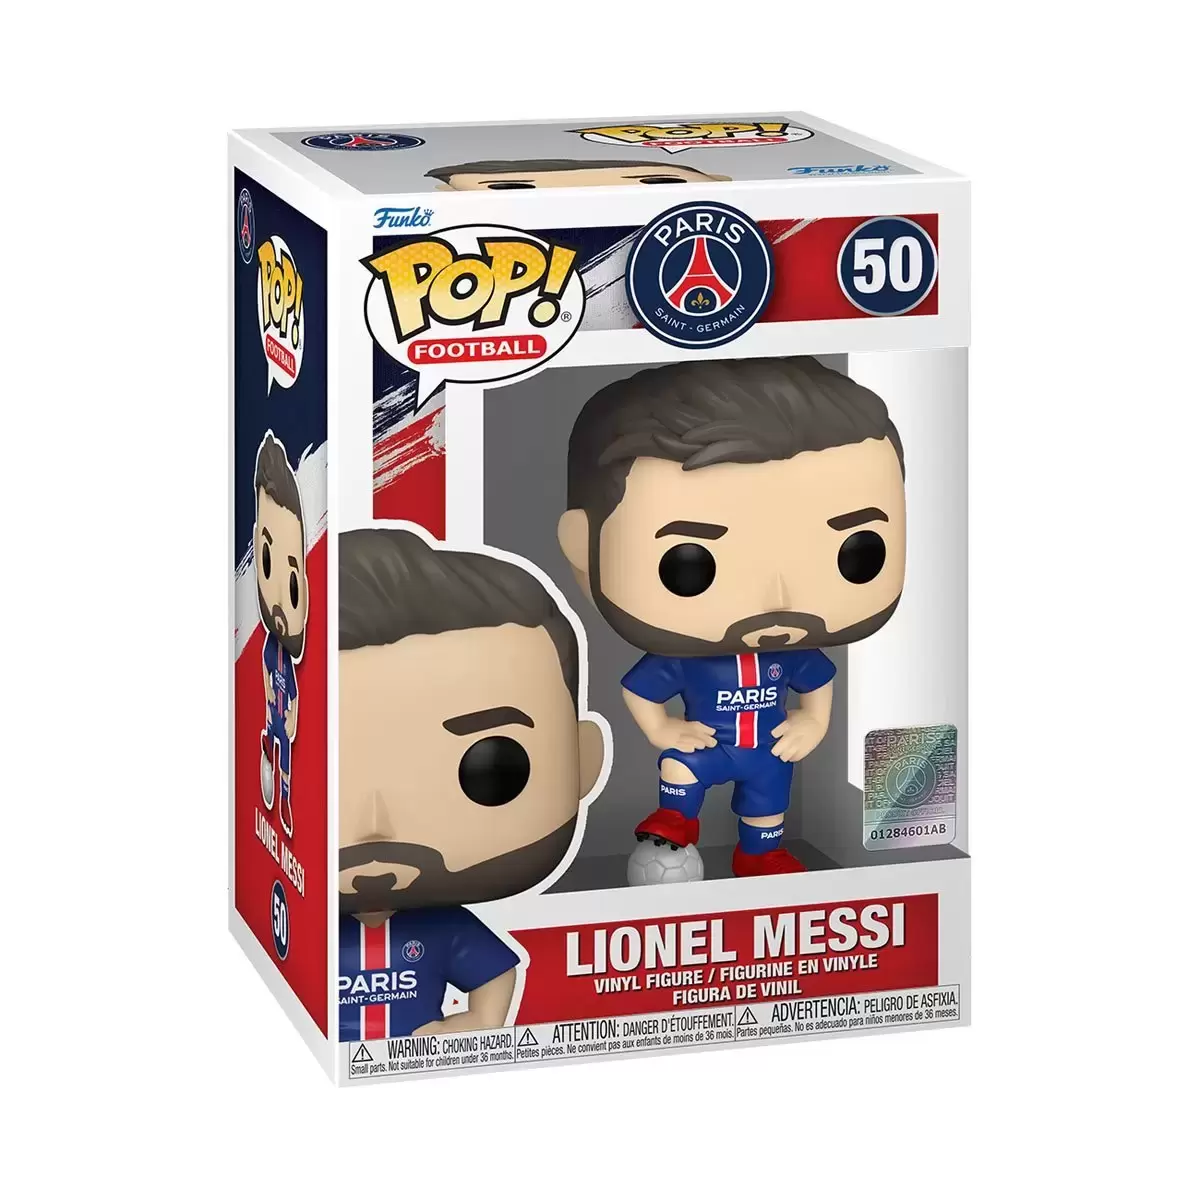 PSG - Lionel Messi - POP! Football (Soccer) action figure 50